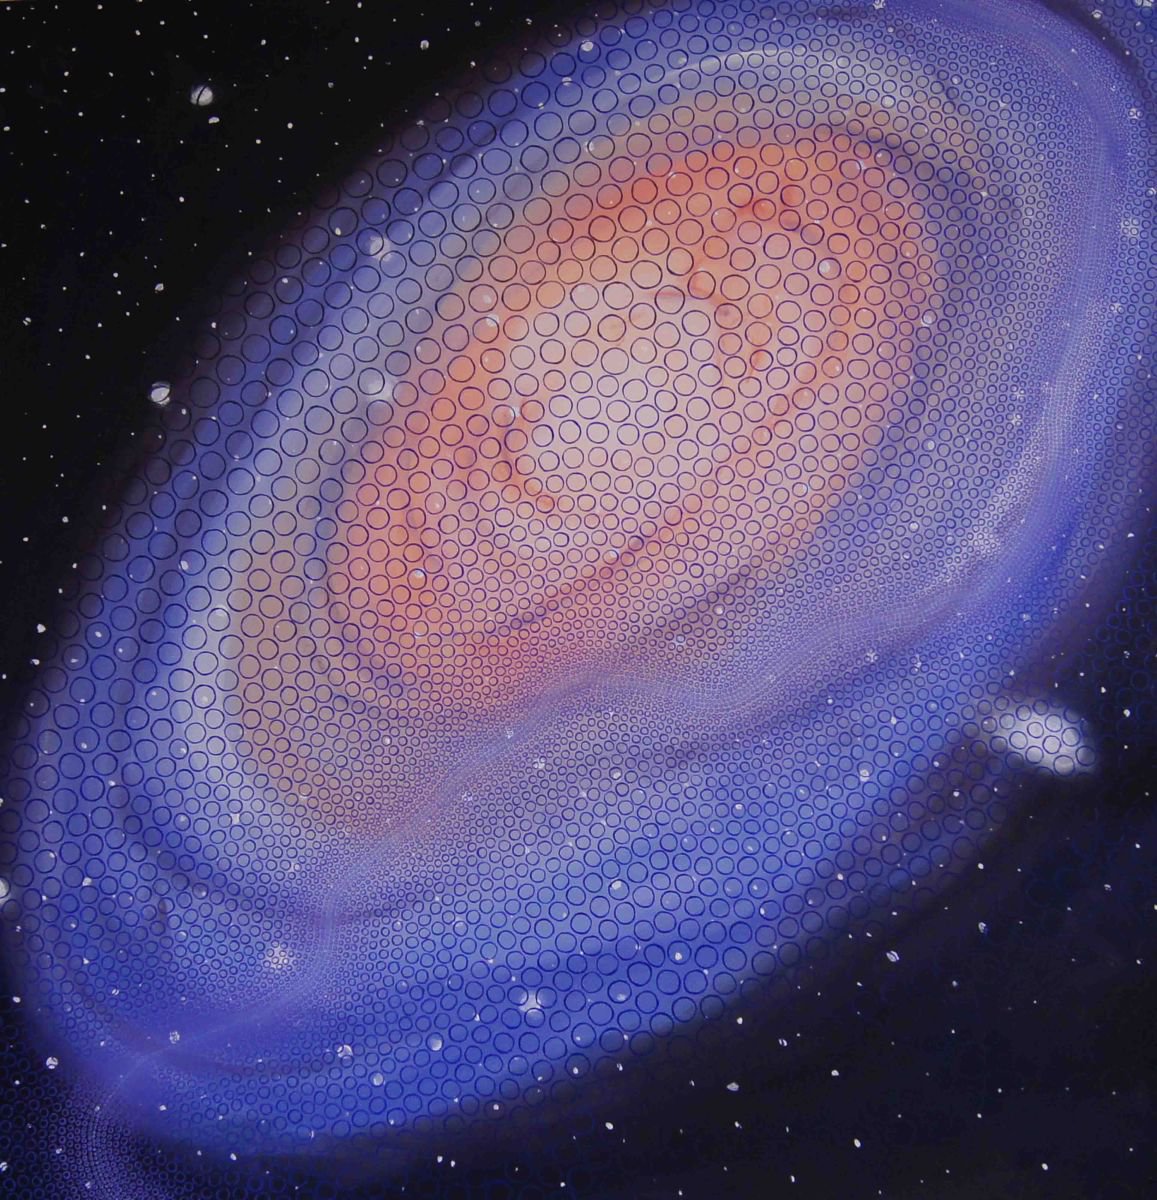 Andromeda Galaxy by Hilde Sondrol